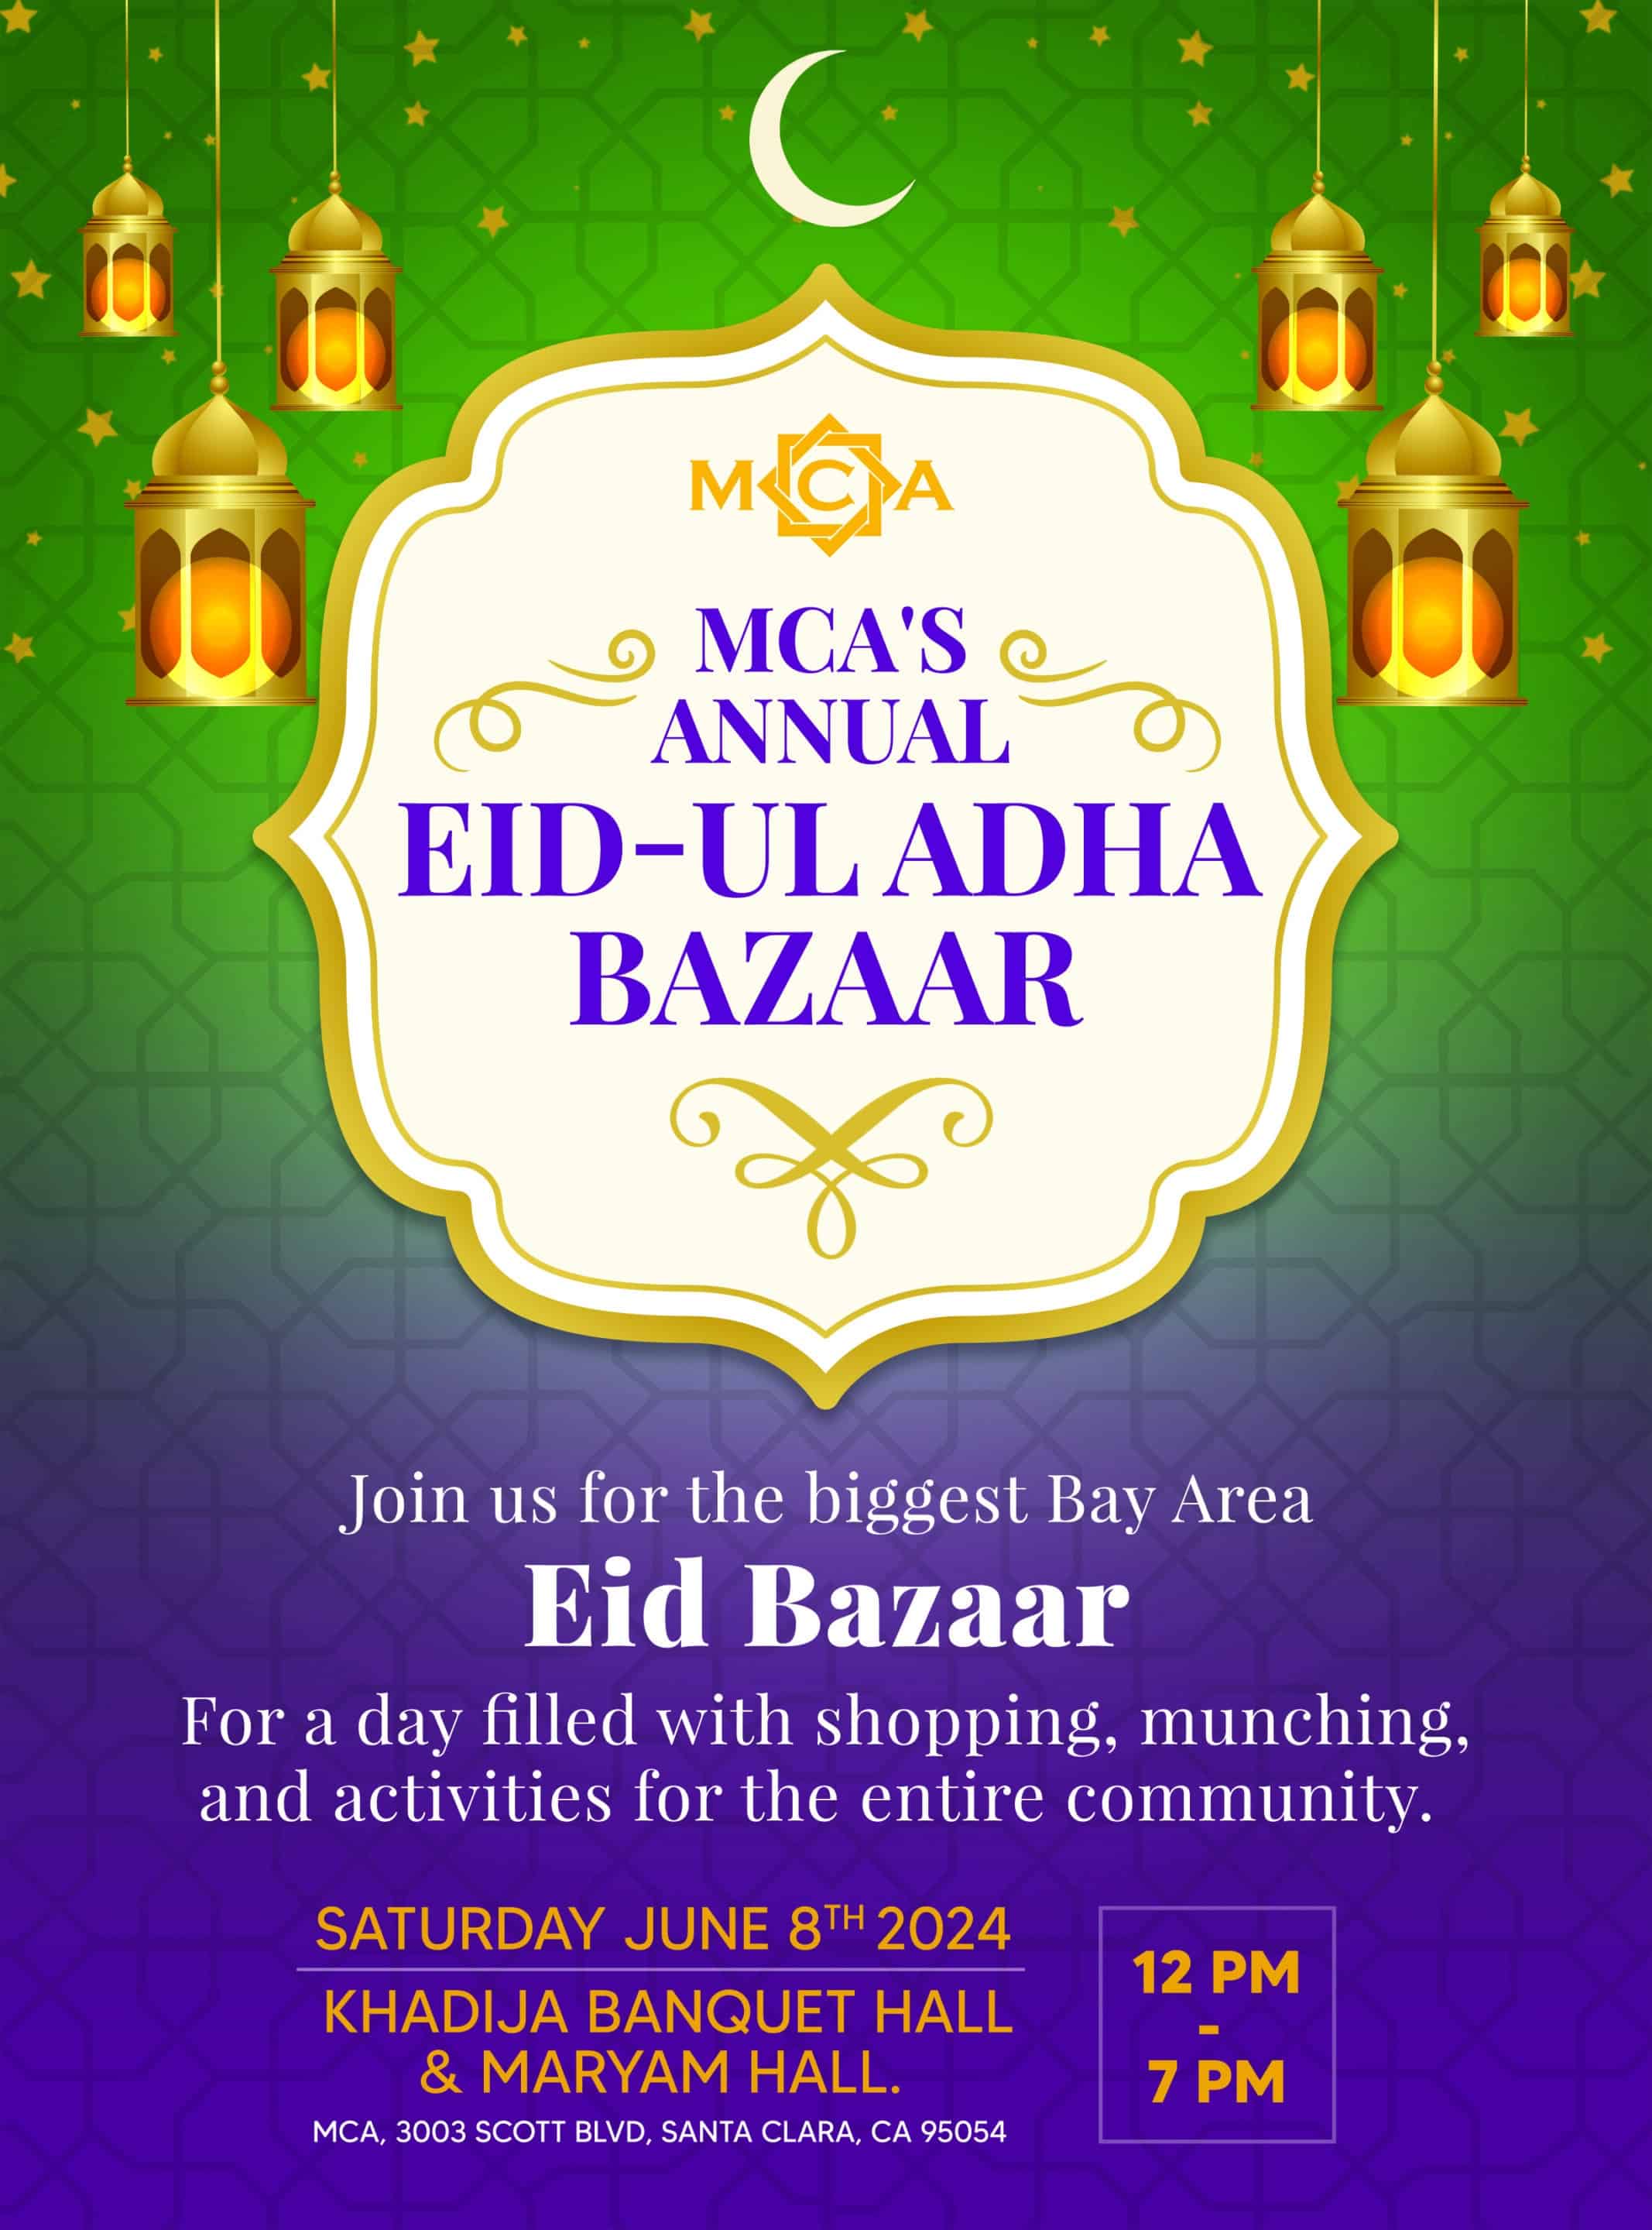 MCA’s Annual Eid-Ul Adha Bazaar